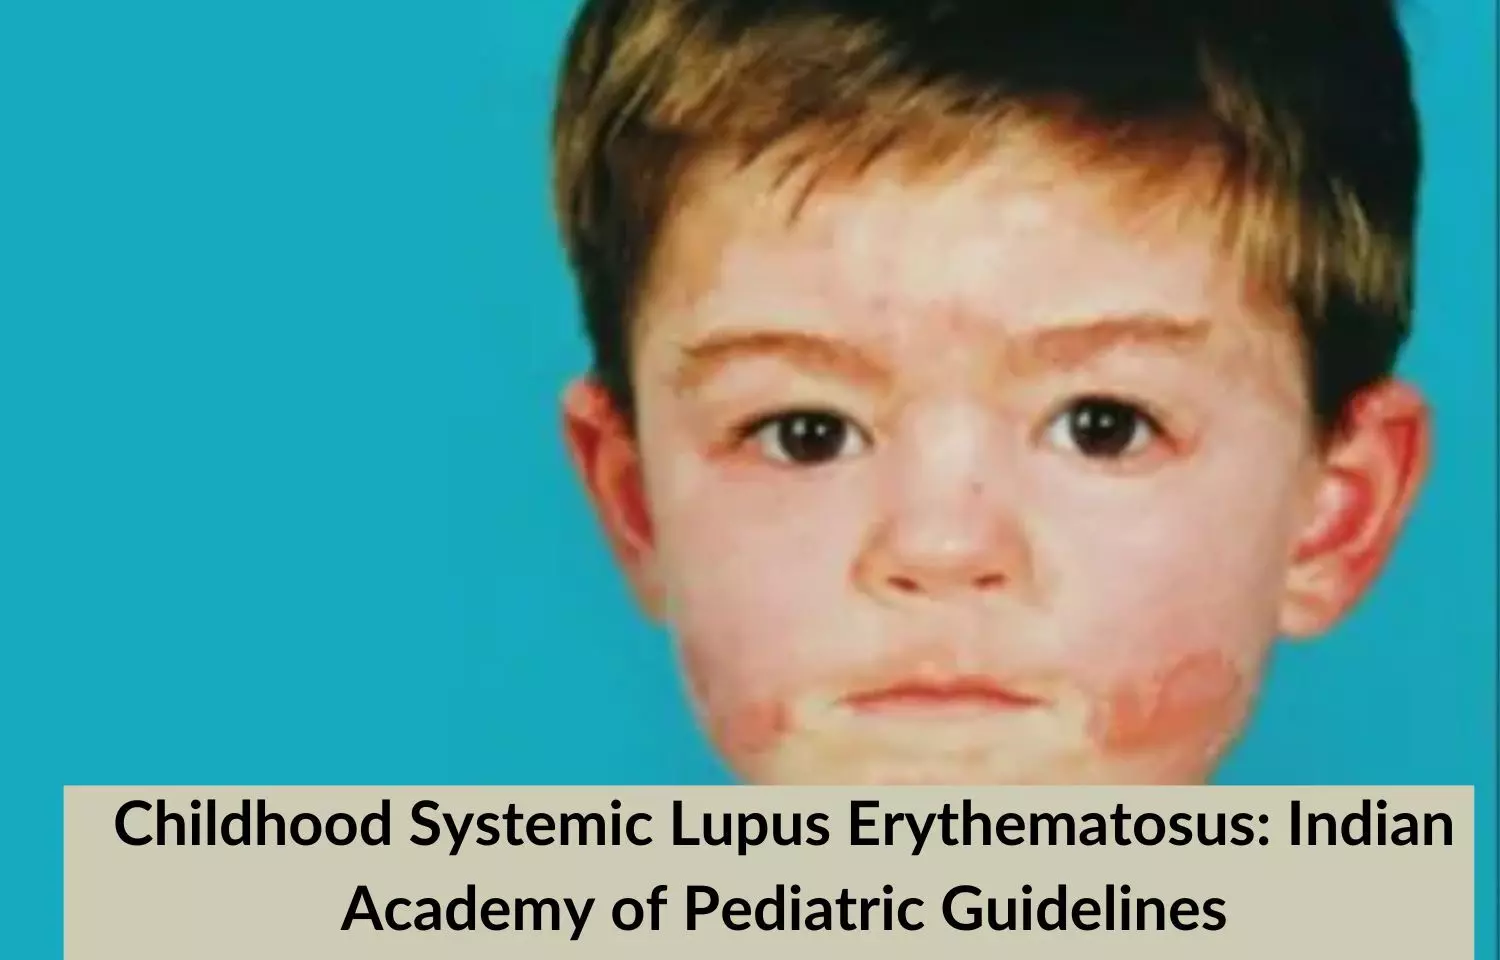 Childhood Systemic Lupus Erythematosus: IAP Guidelines